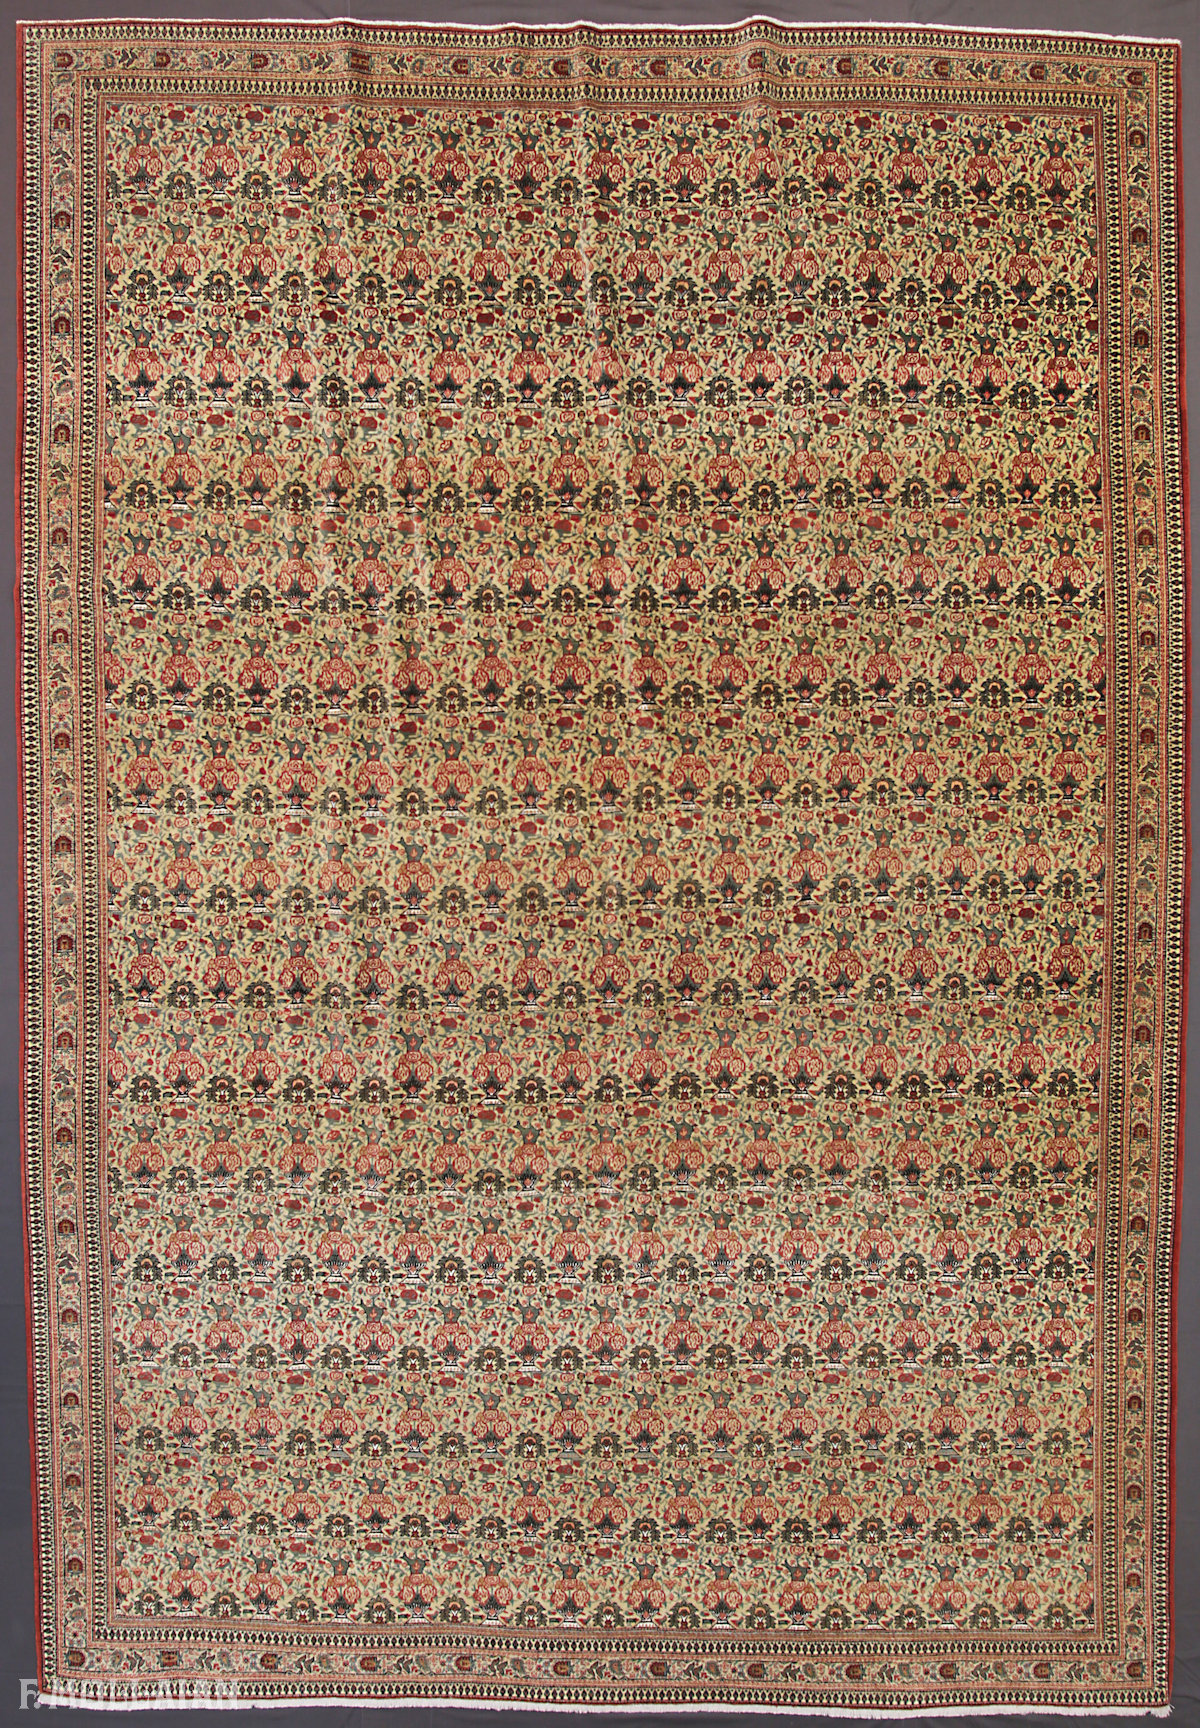 فرش نیمه آنتیک تهران گل ابریشم کد:۸۱۴۰۰۶۵۰